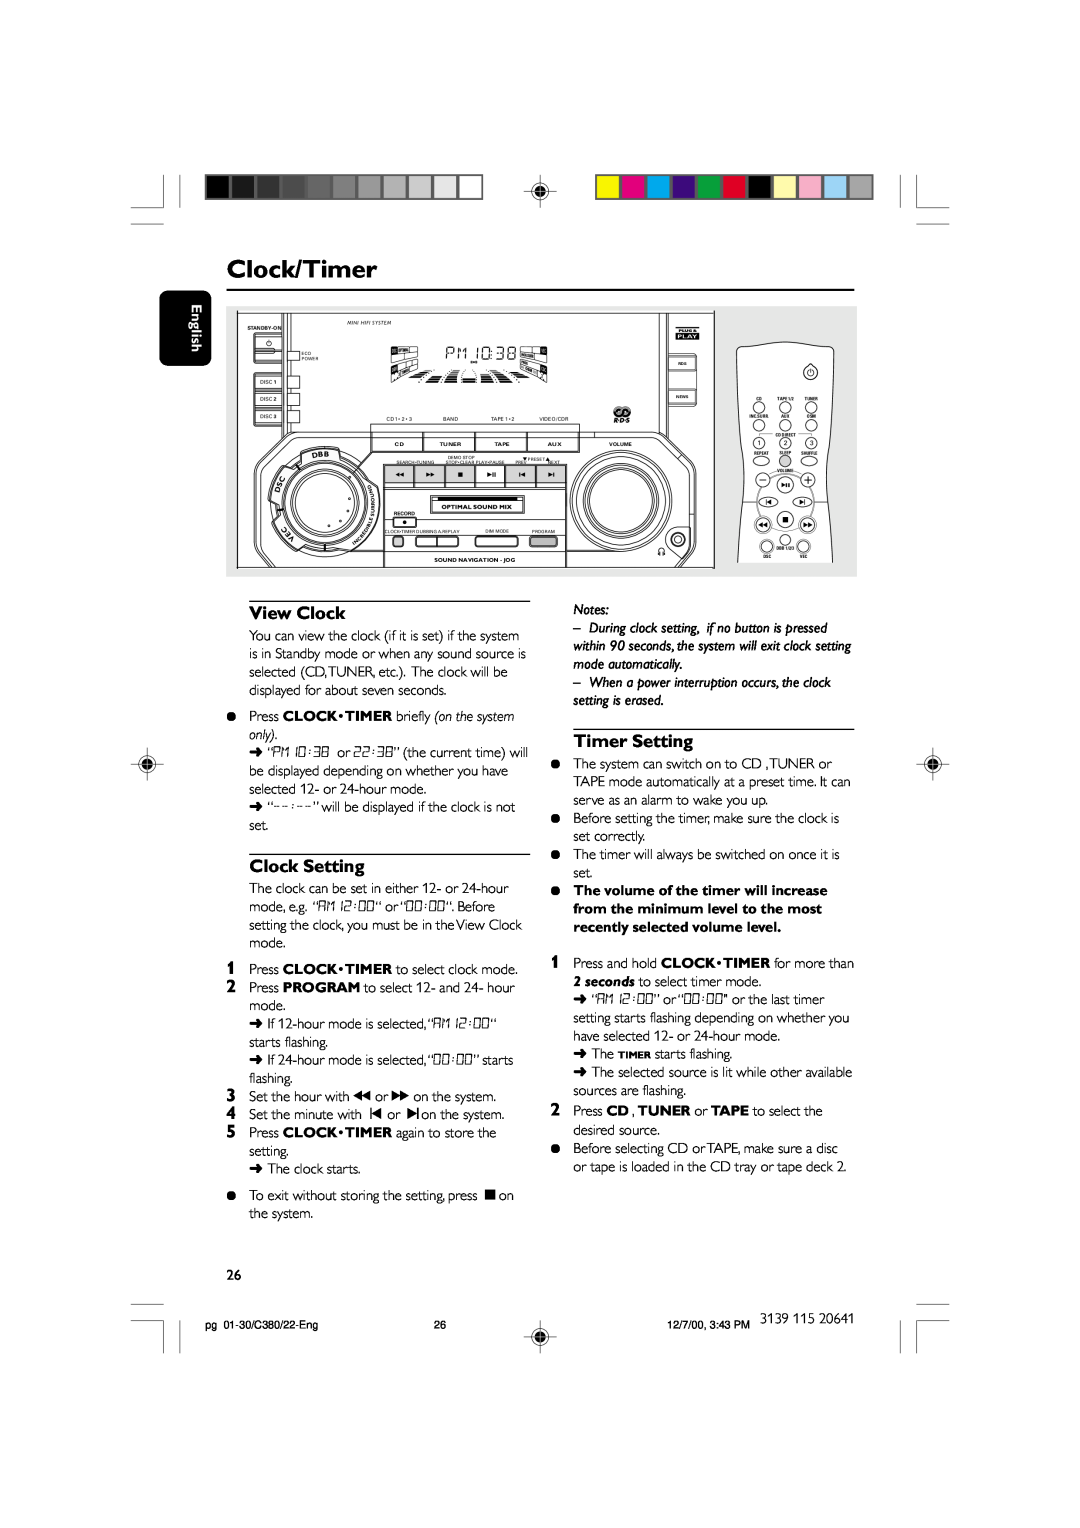 Philips FW-C380 manual Clock/Timer, View Clock, Timer Setting, Clock Setting 